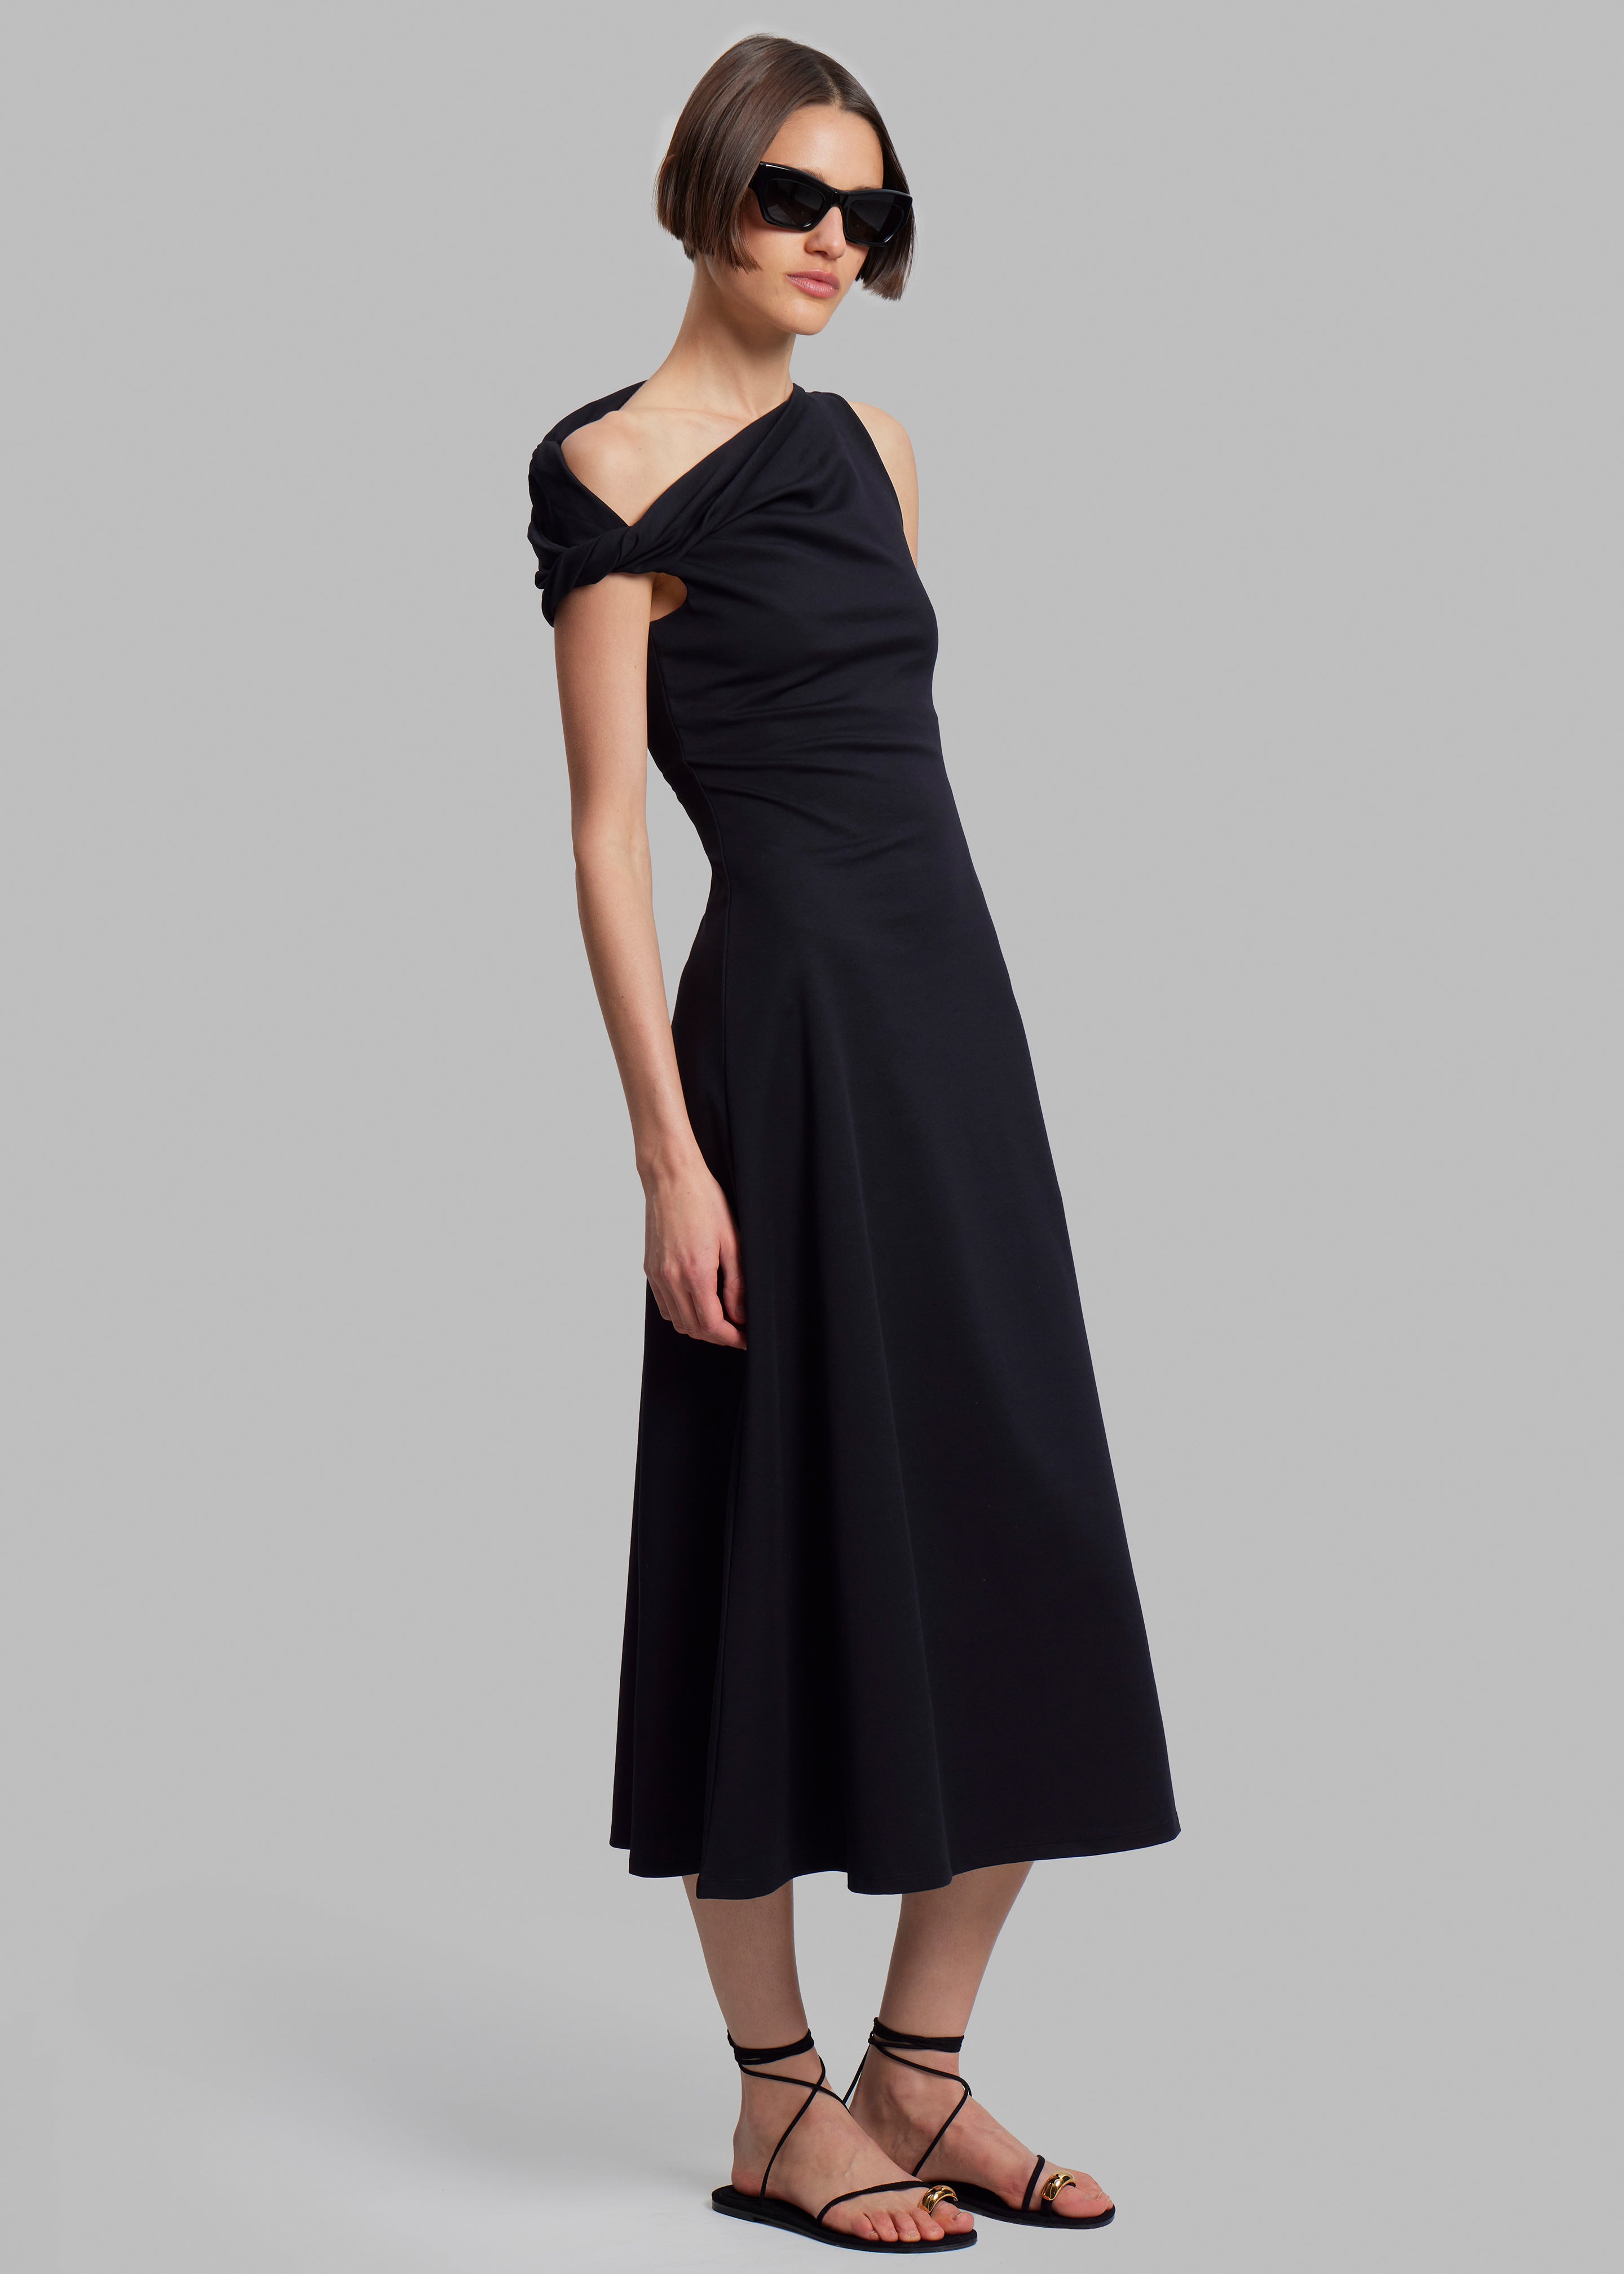 Beaufille Indi Dress - Black - 3